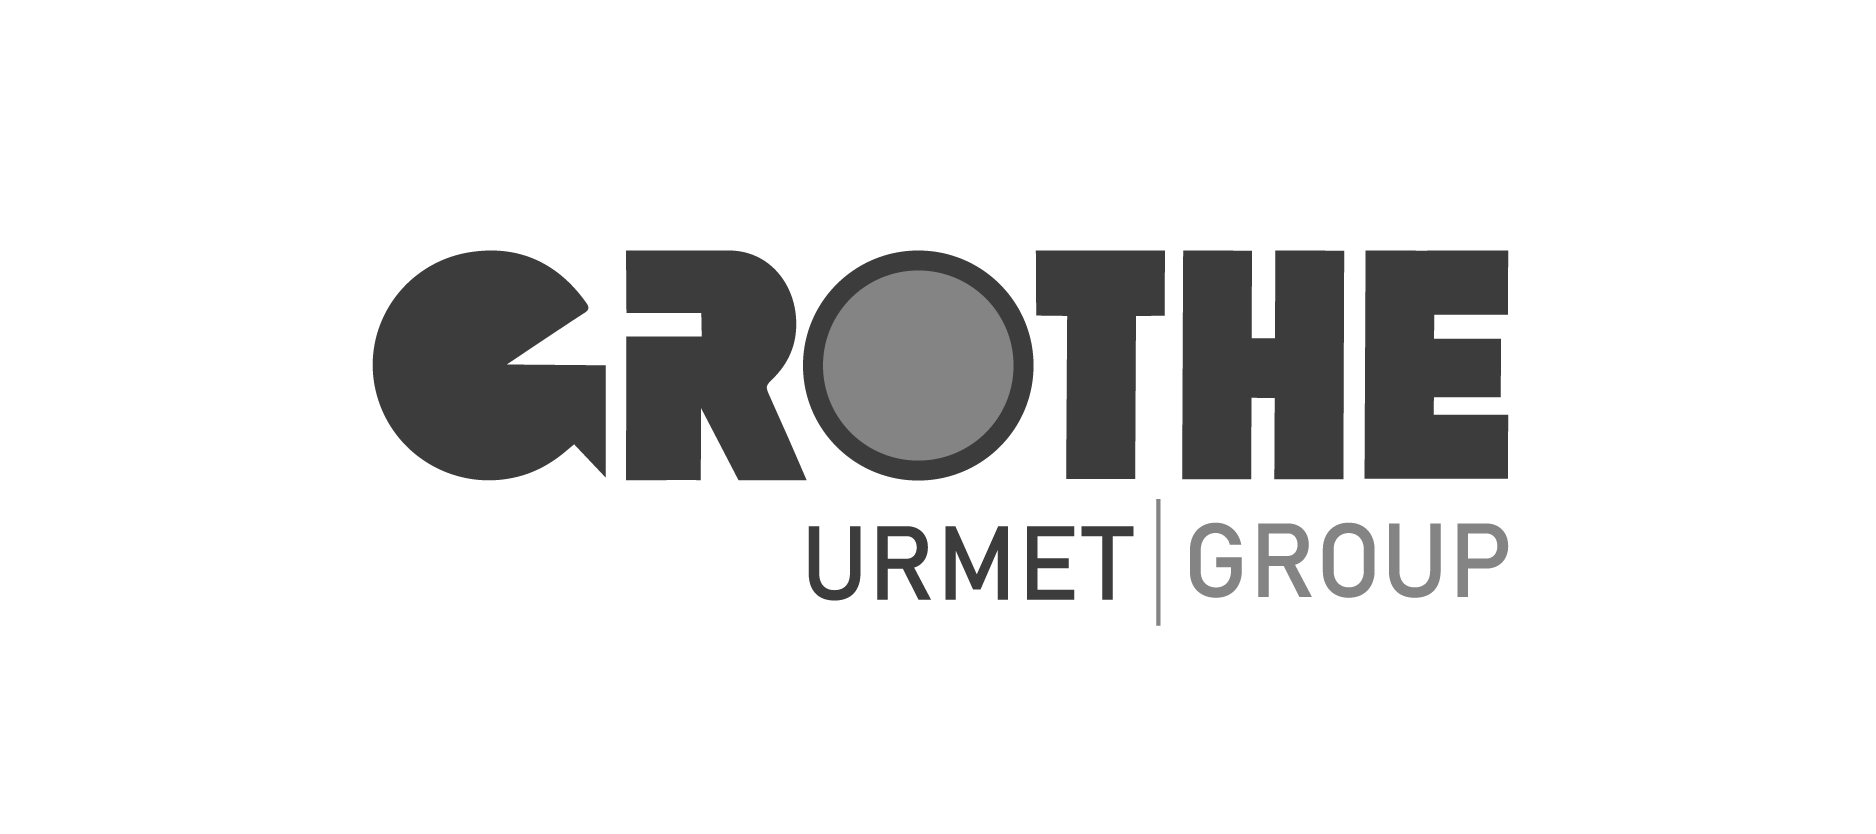 grothe-logo